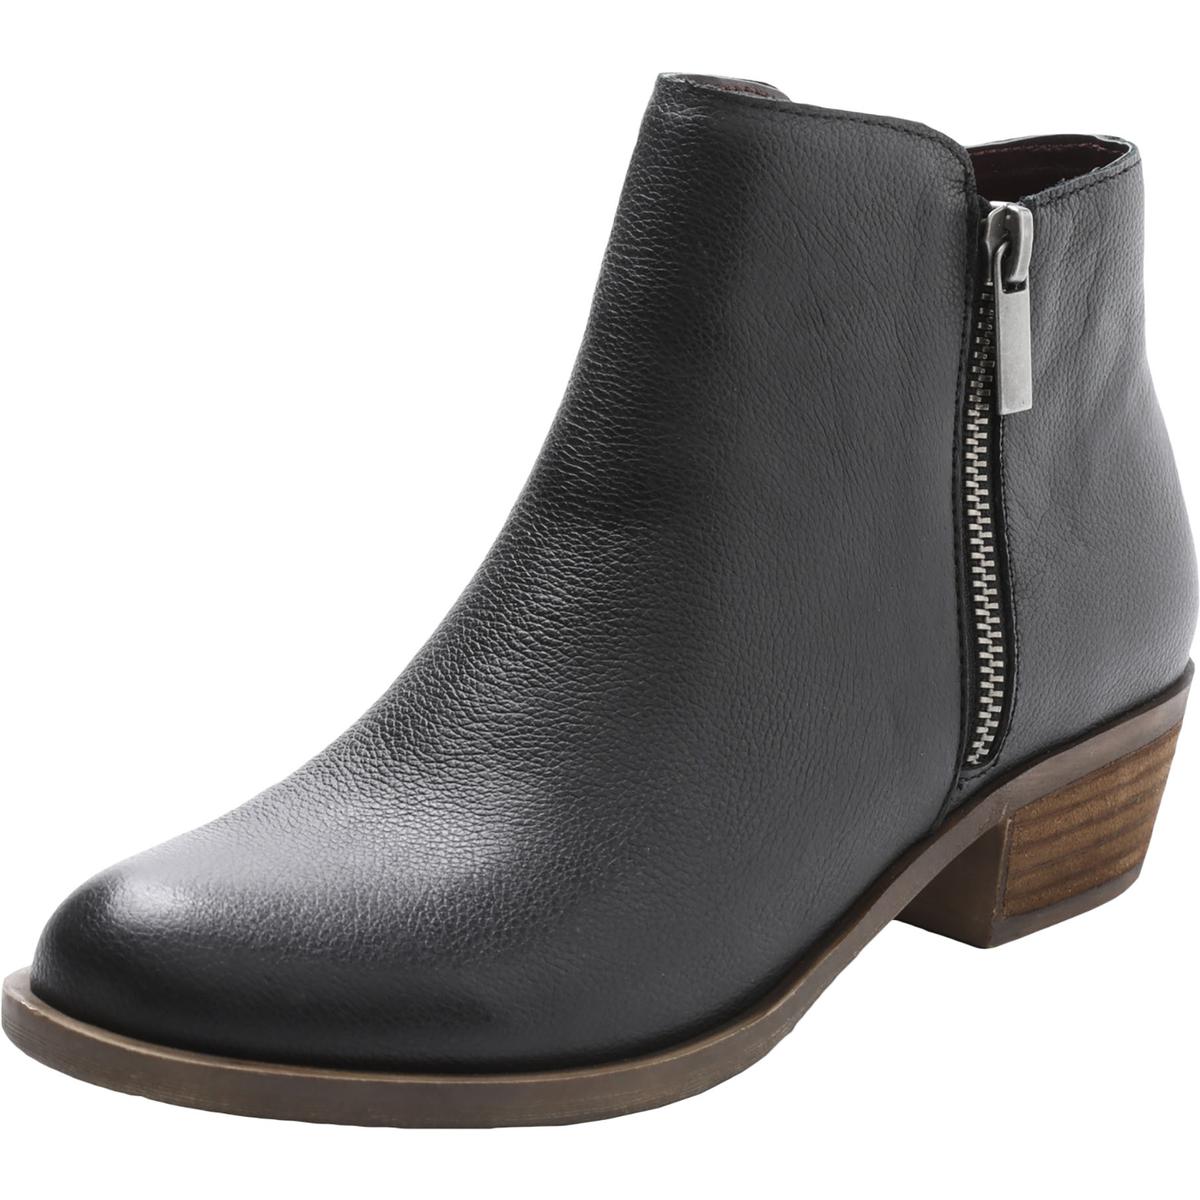 Kensie Womens Gabriella Black Leather Booties Shoes 8 Medium (B,M) BHFO ...